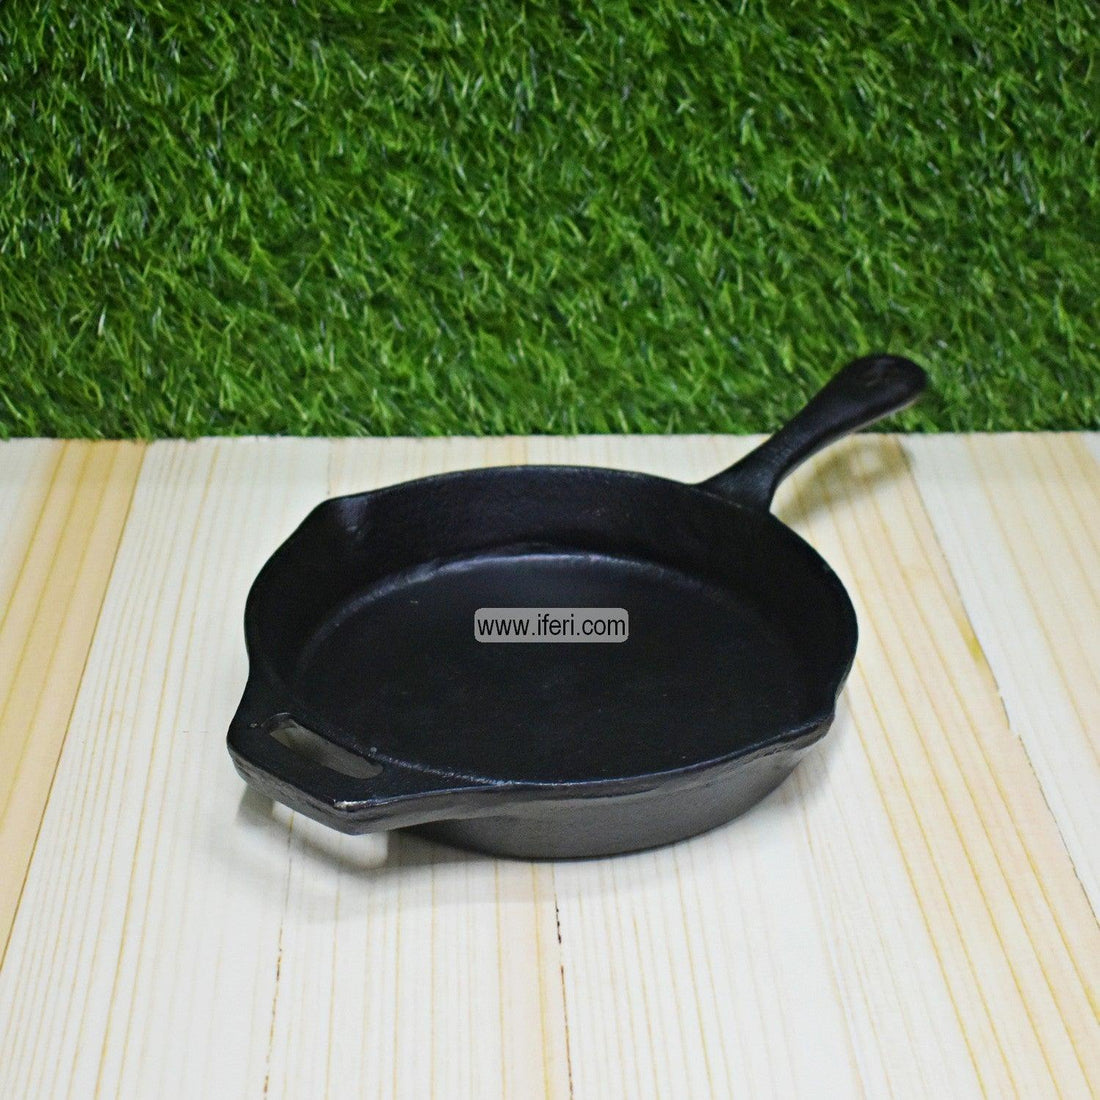 23cm Cast Iron Grill Pan SY2006 Price in Bangladesh - iferi.com